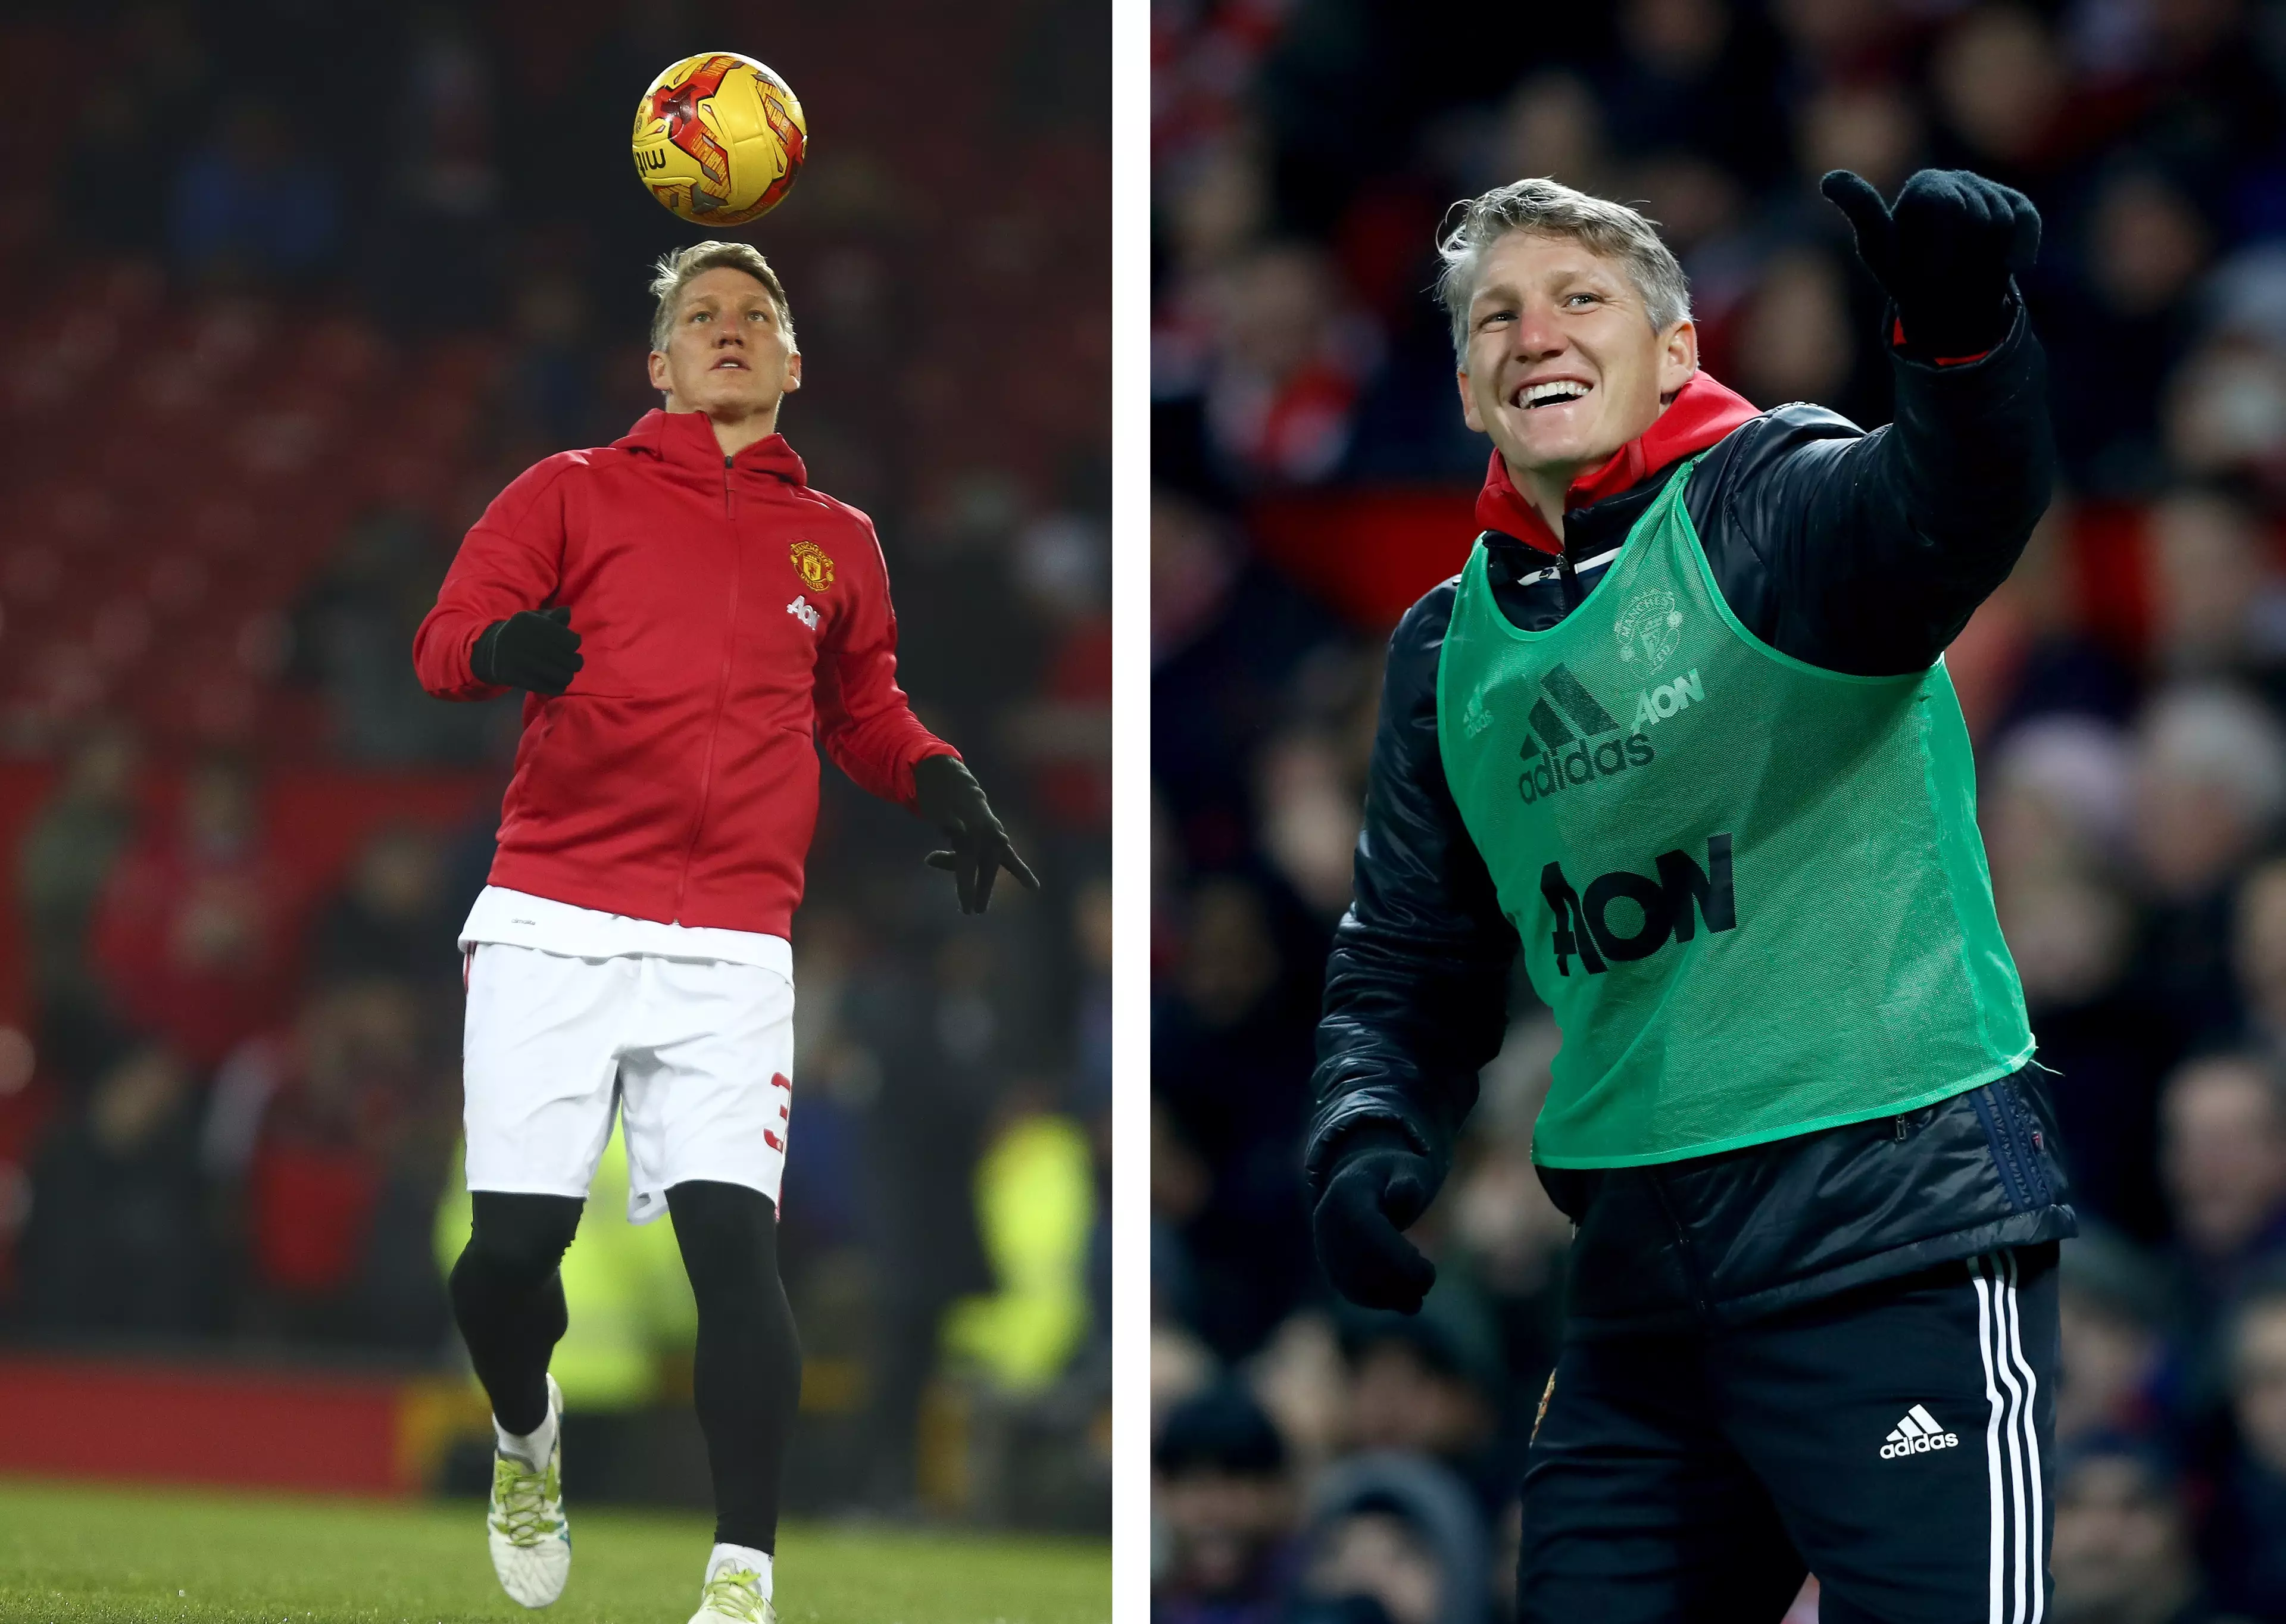 Bastian Schweinsteiger's Manchester United Career To Get Another Boost